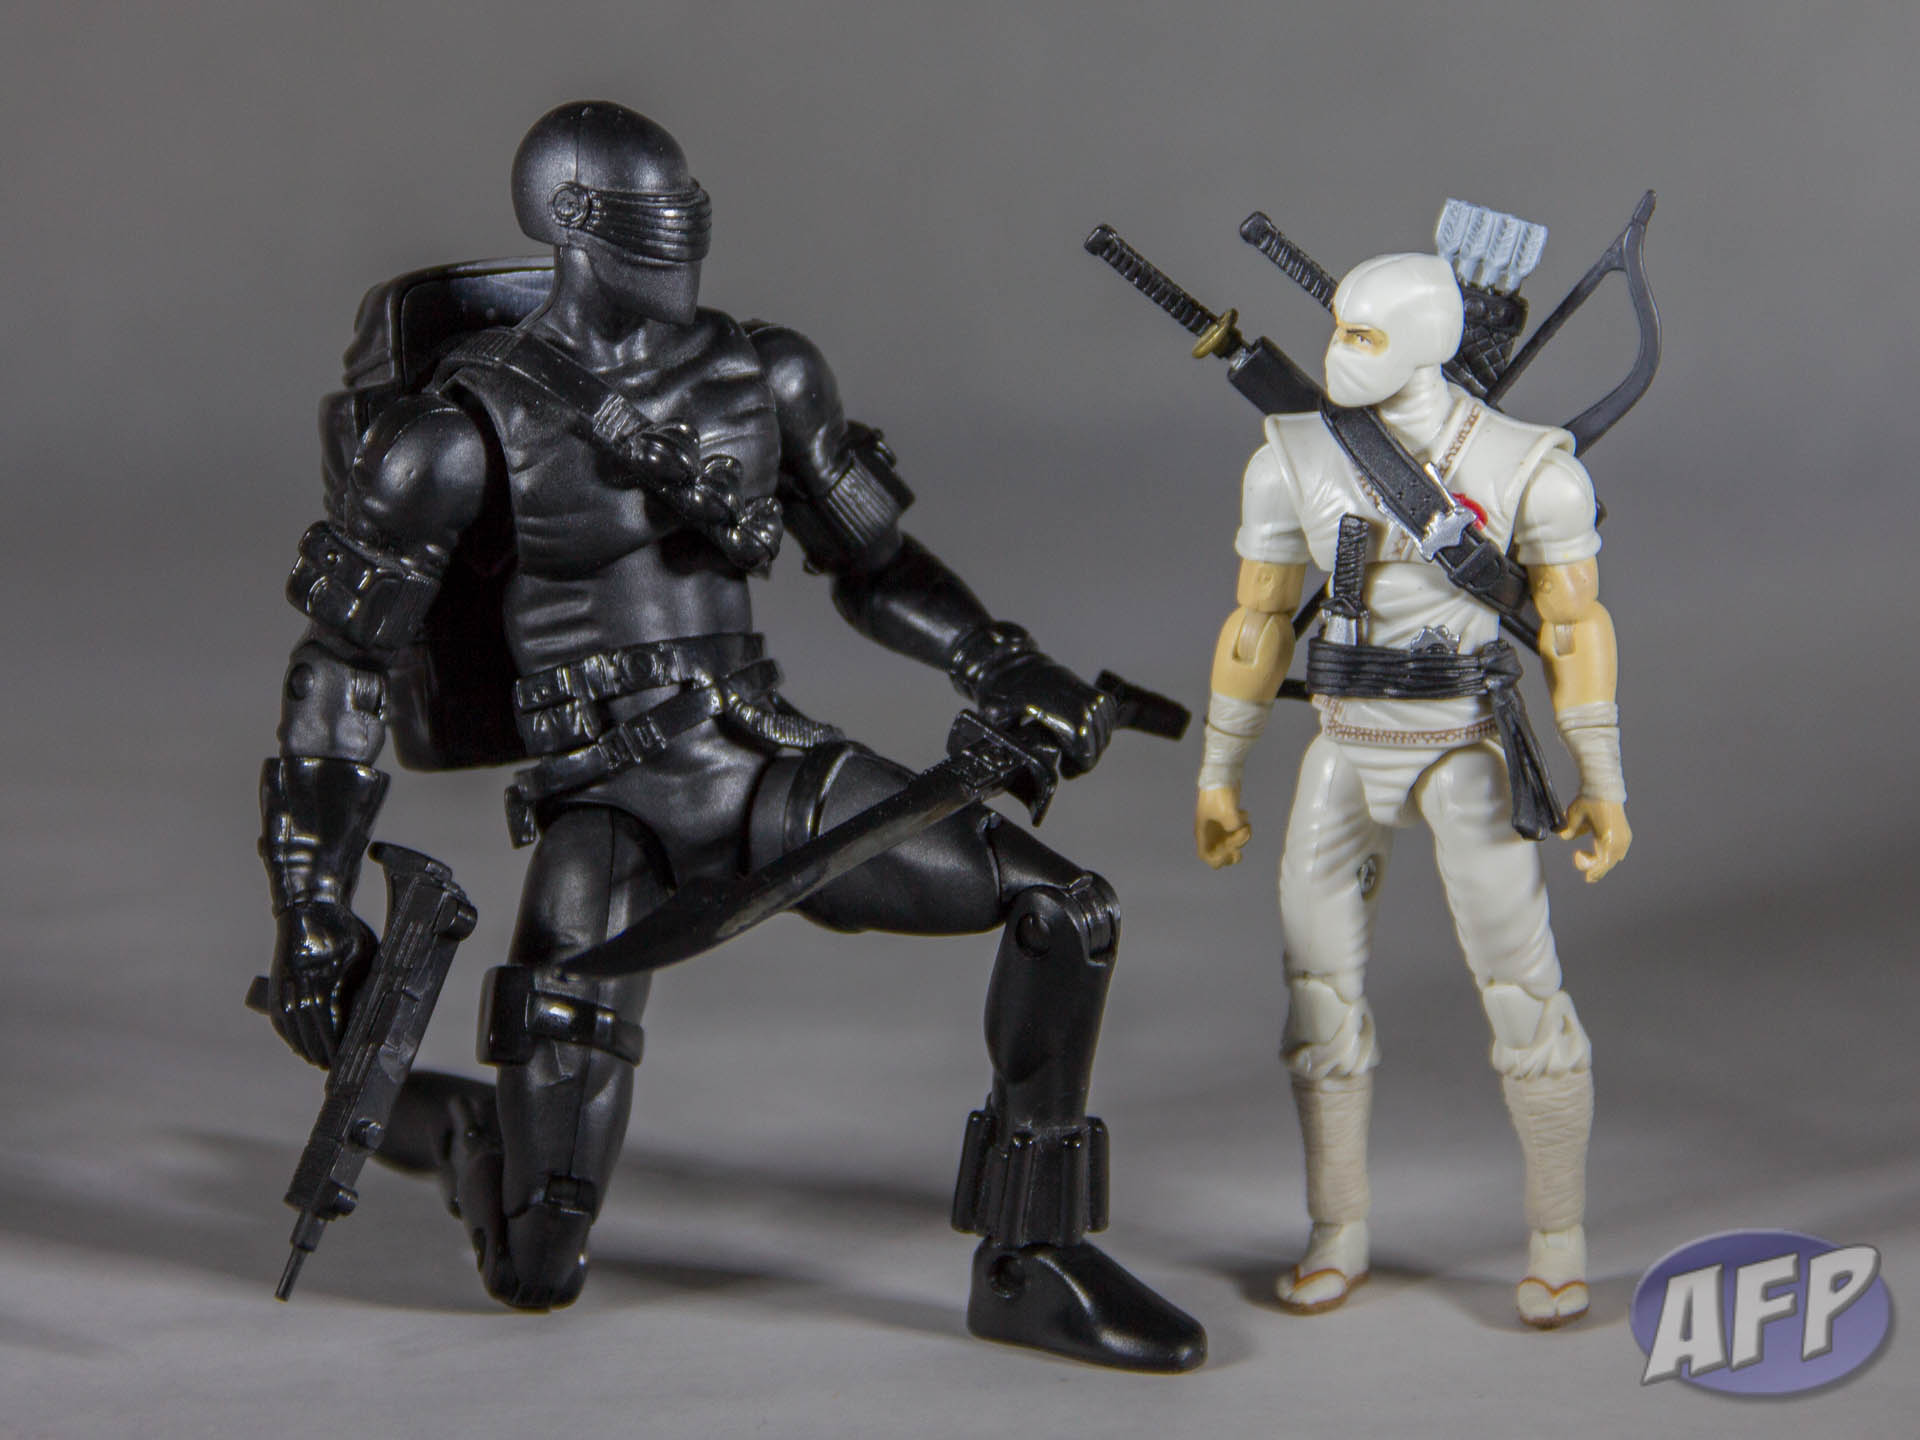 GI Joe Toy Sigma Six & 12 Action Figure Accessories: Grenade, Axe, Knife